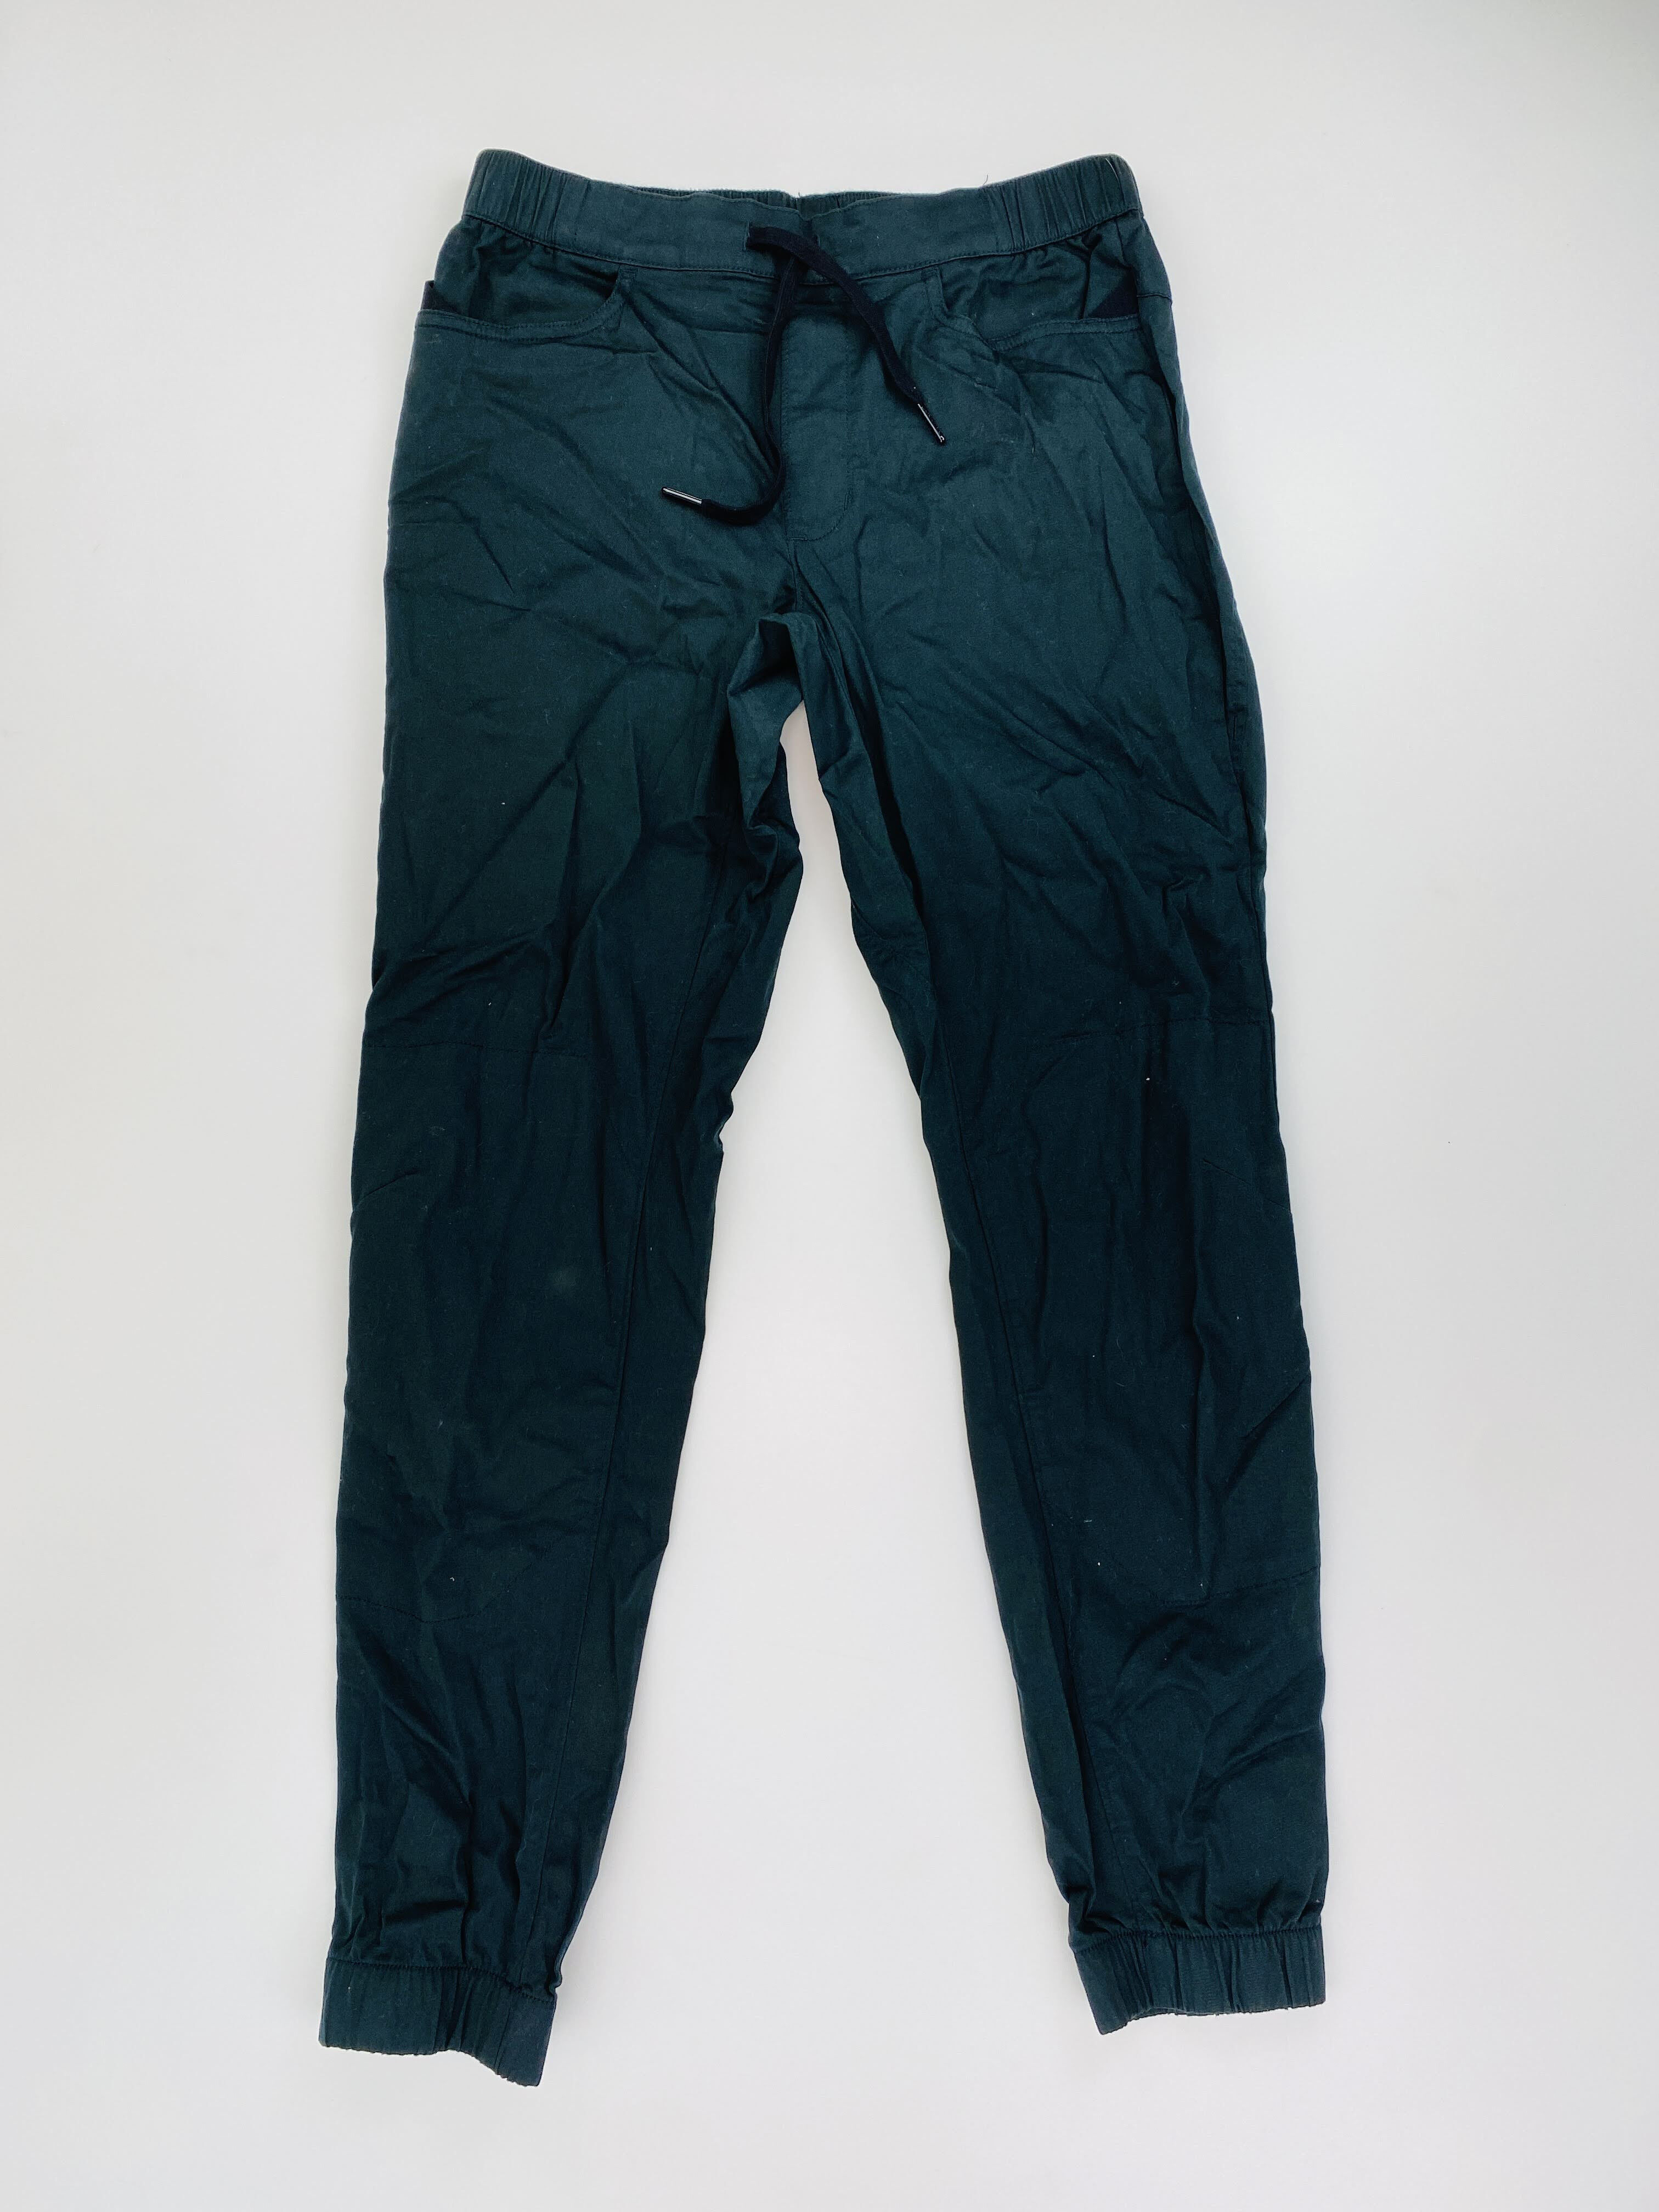 Black Diamond Notion Pants - Seconde main Pantalon homme - Noir - S | Hardloop